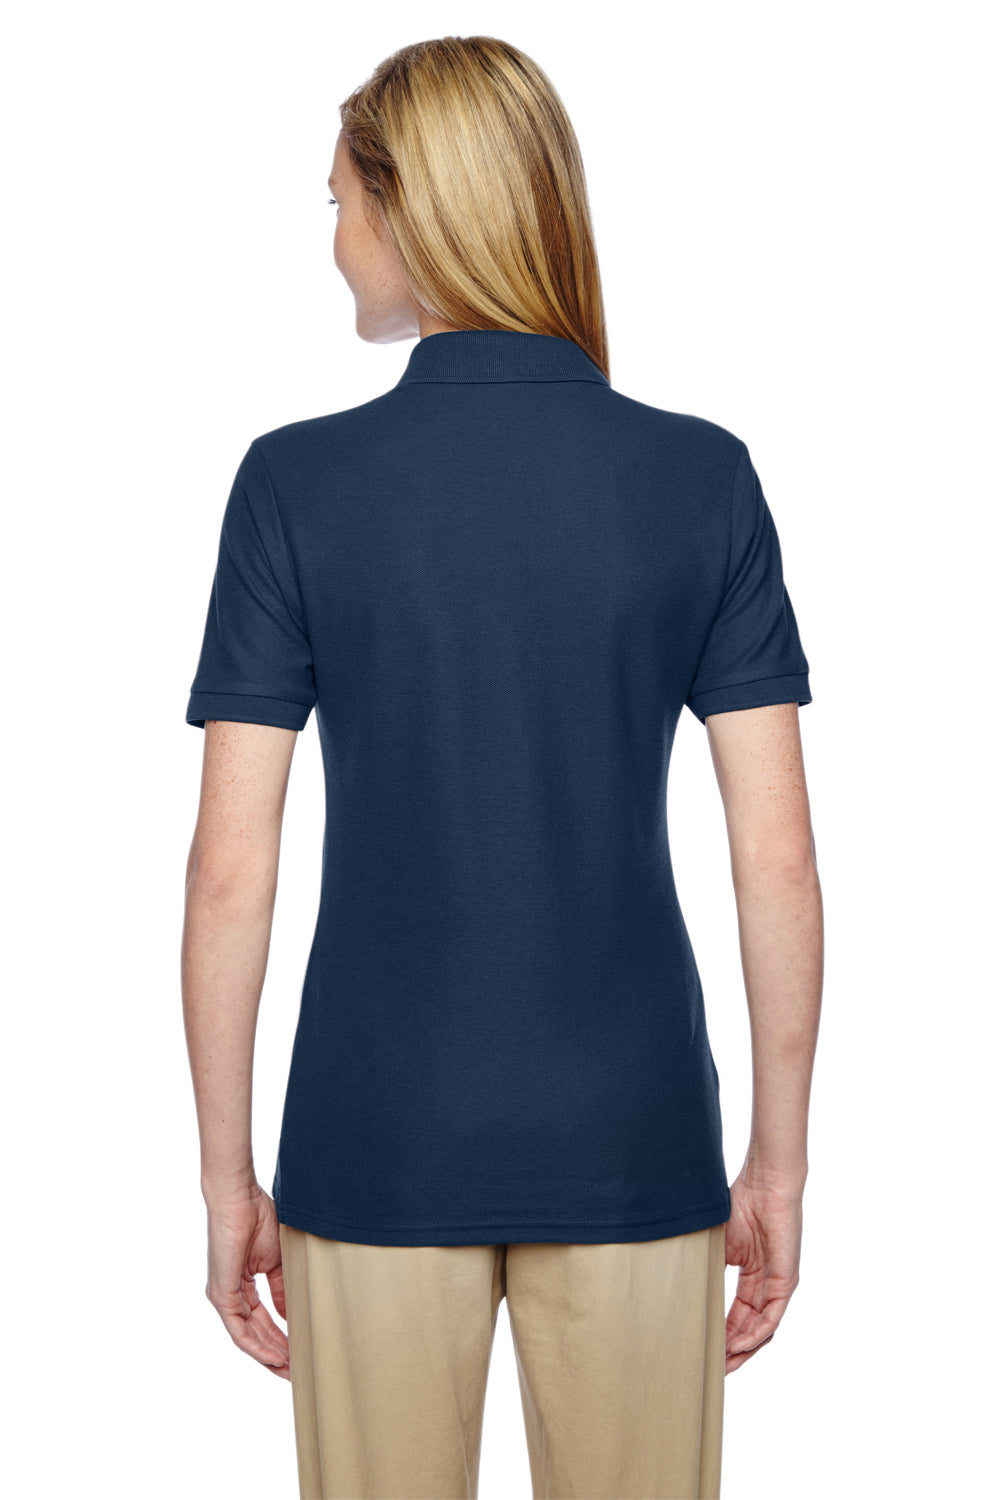 Jerzees 537WR Womens Easy Care Moisture Wicking Short Sleeve Polo Shirt Navy Blue Back